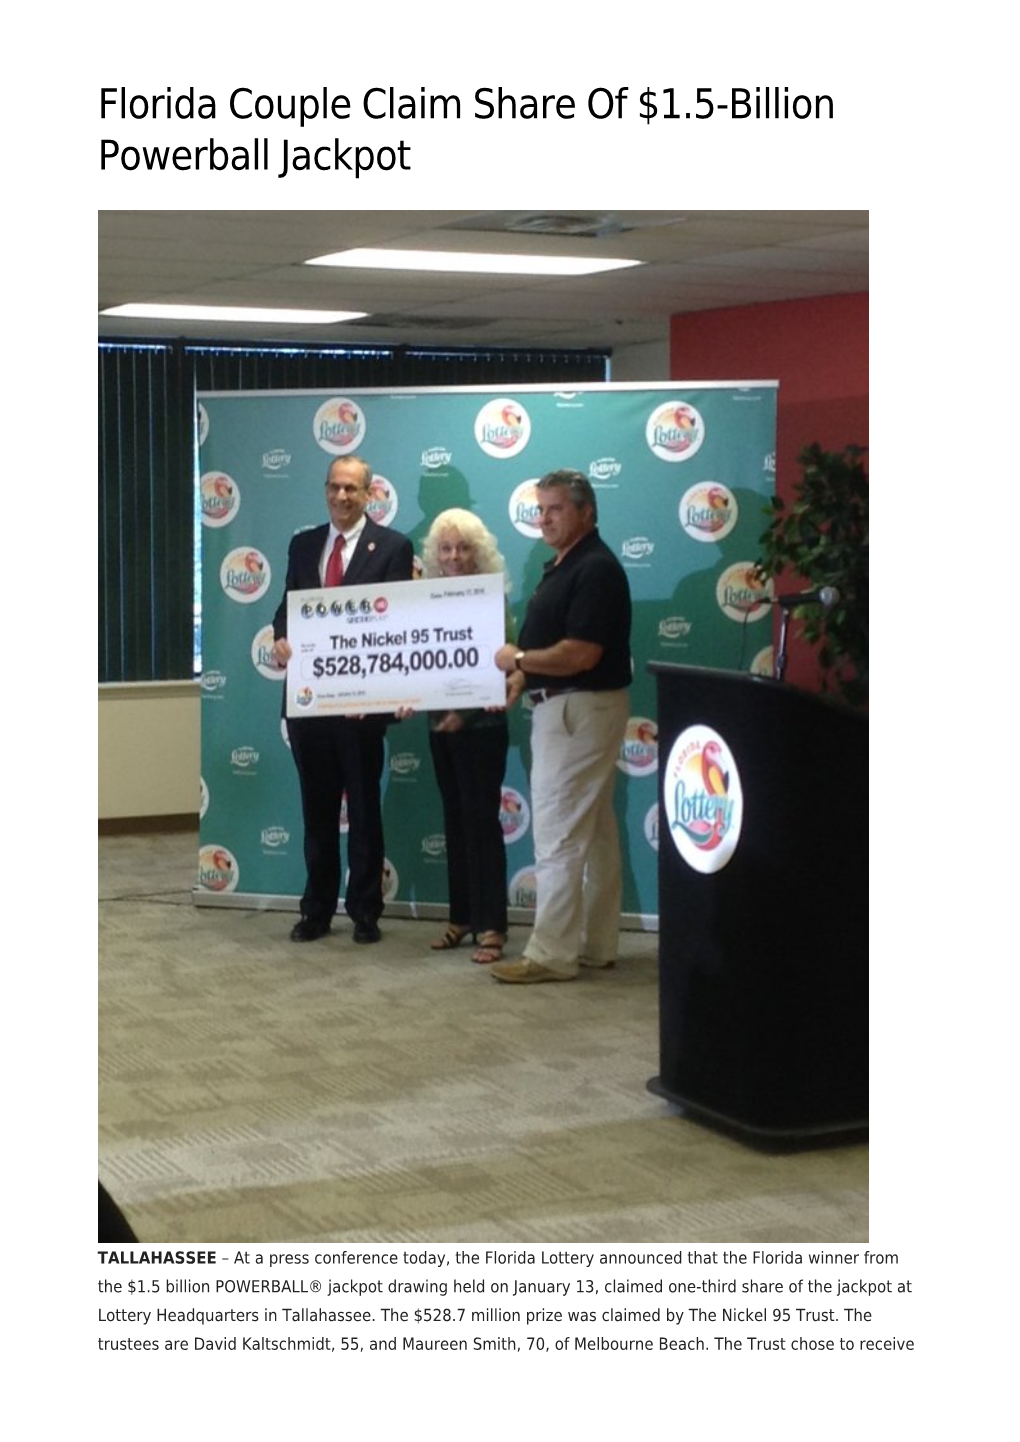 Florida Couple Claim Share of $1.5-Billion Powerball Jackpot